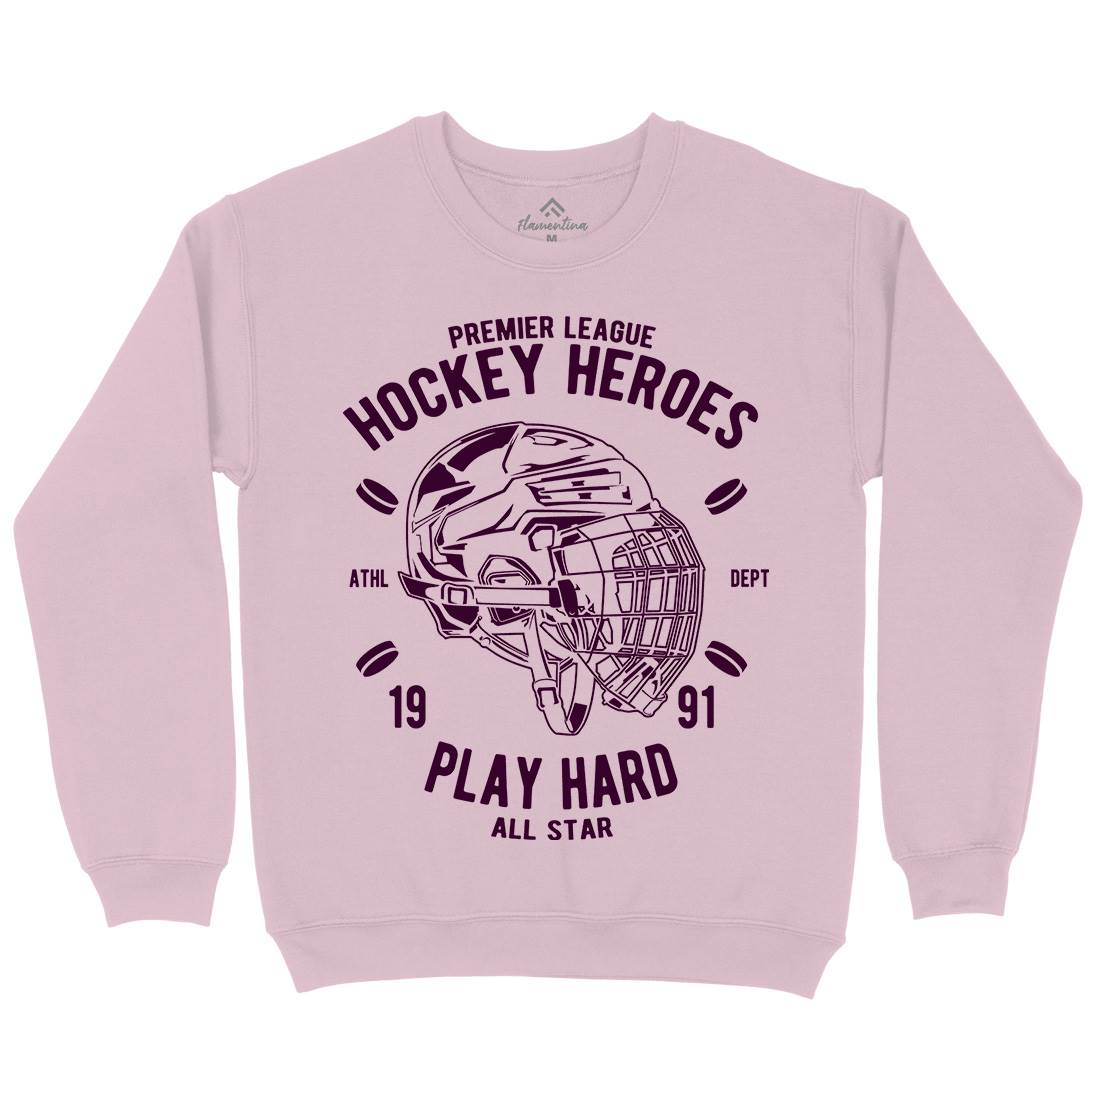 Hockey Heroes Kids Crew Neck Sweatshirt Sport A064